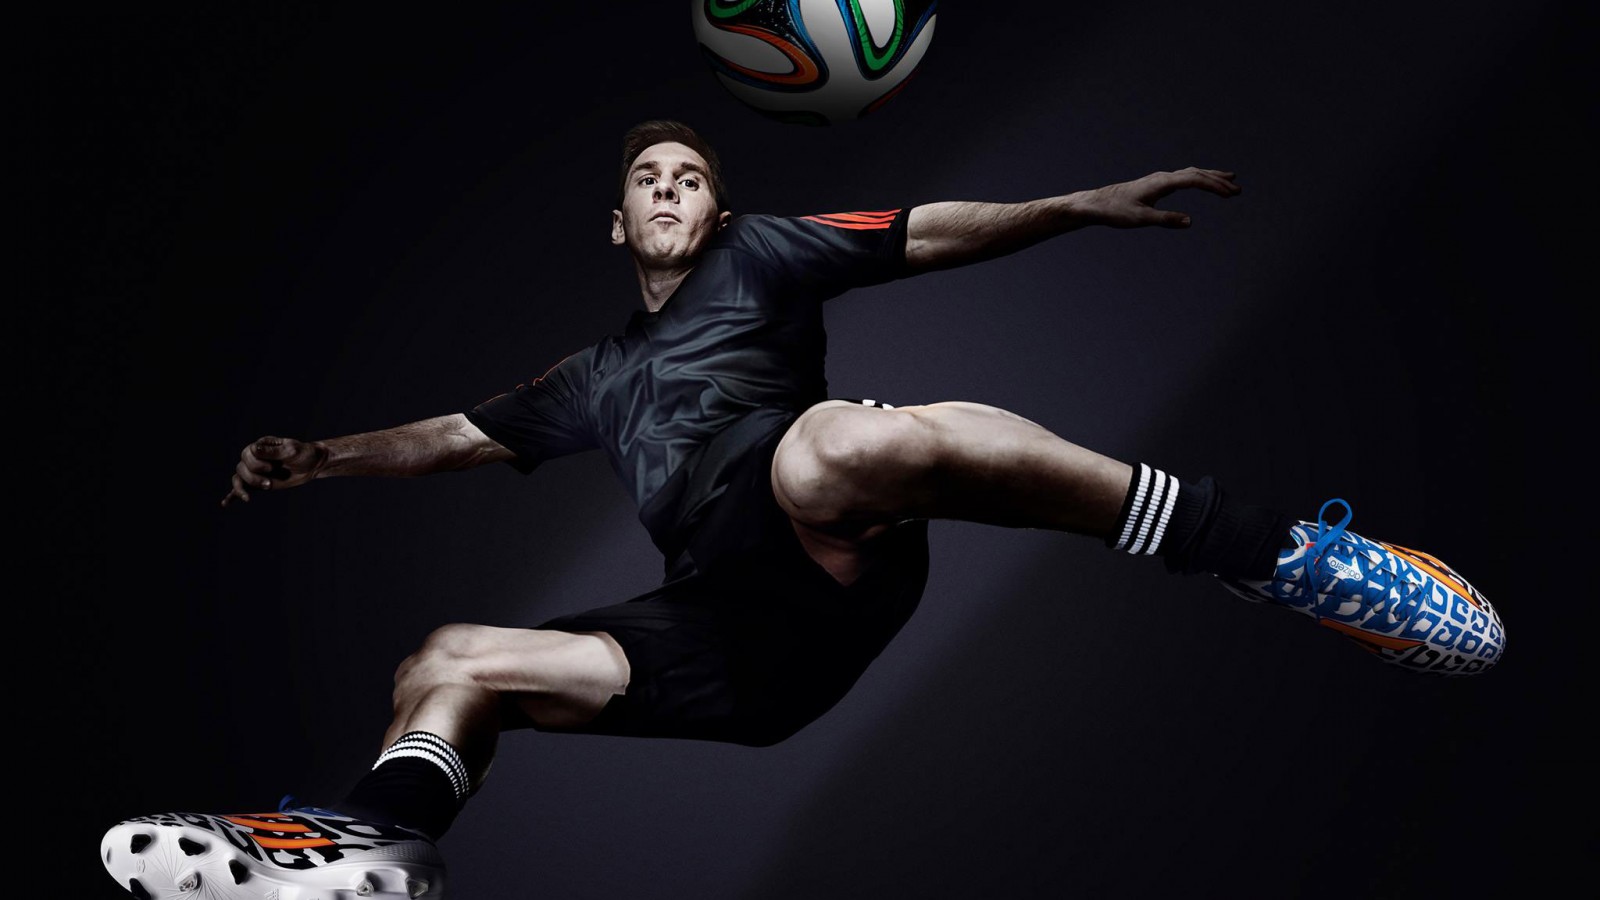 Leo Messi Adidas HD Wallpaper Image